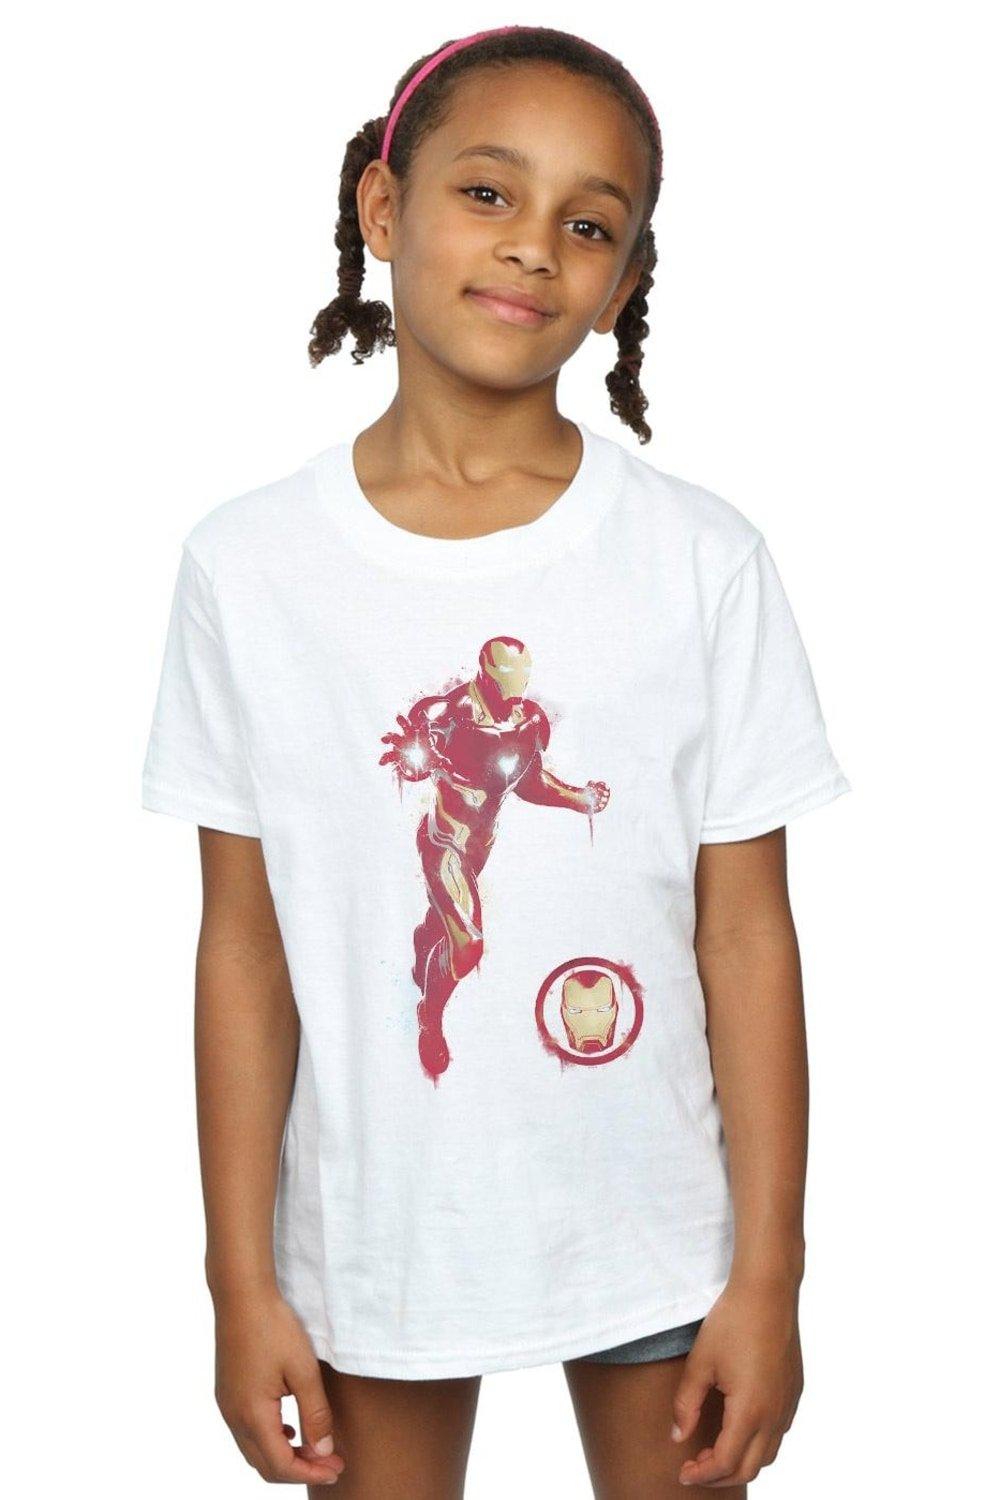 Avengers Endgame Painted Iron Man Cotton T-Shirt